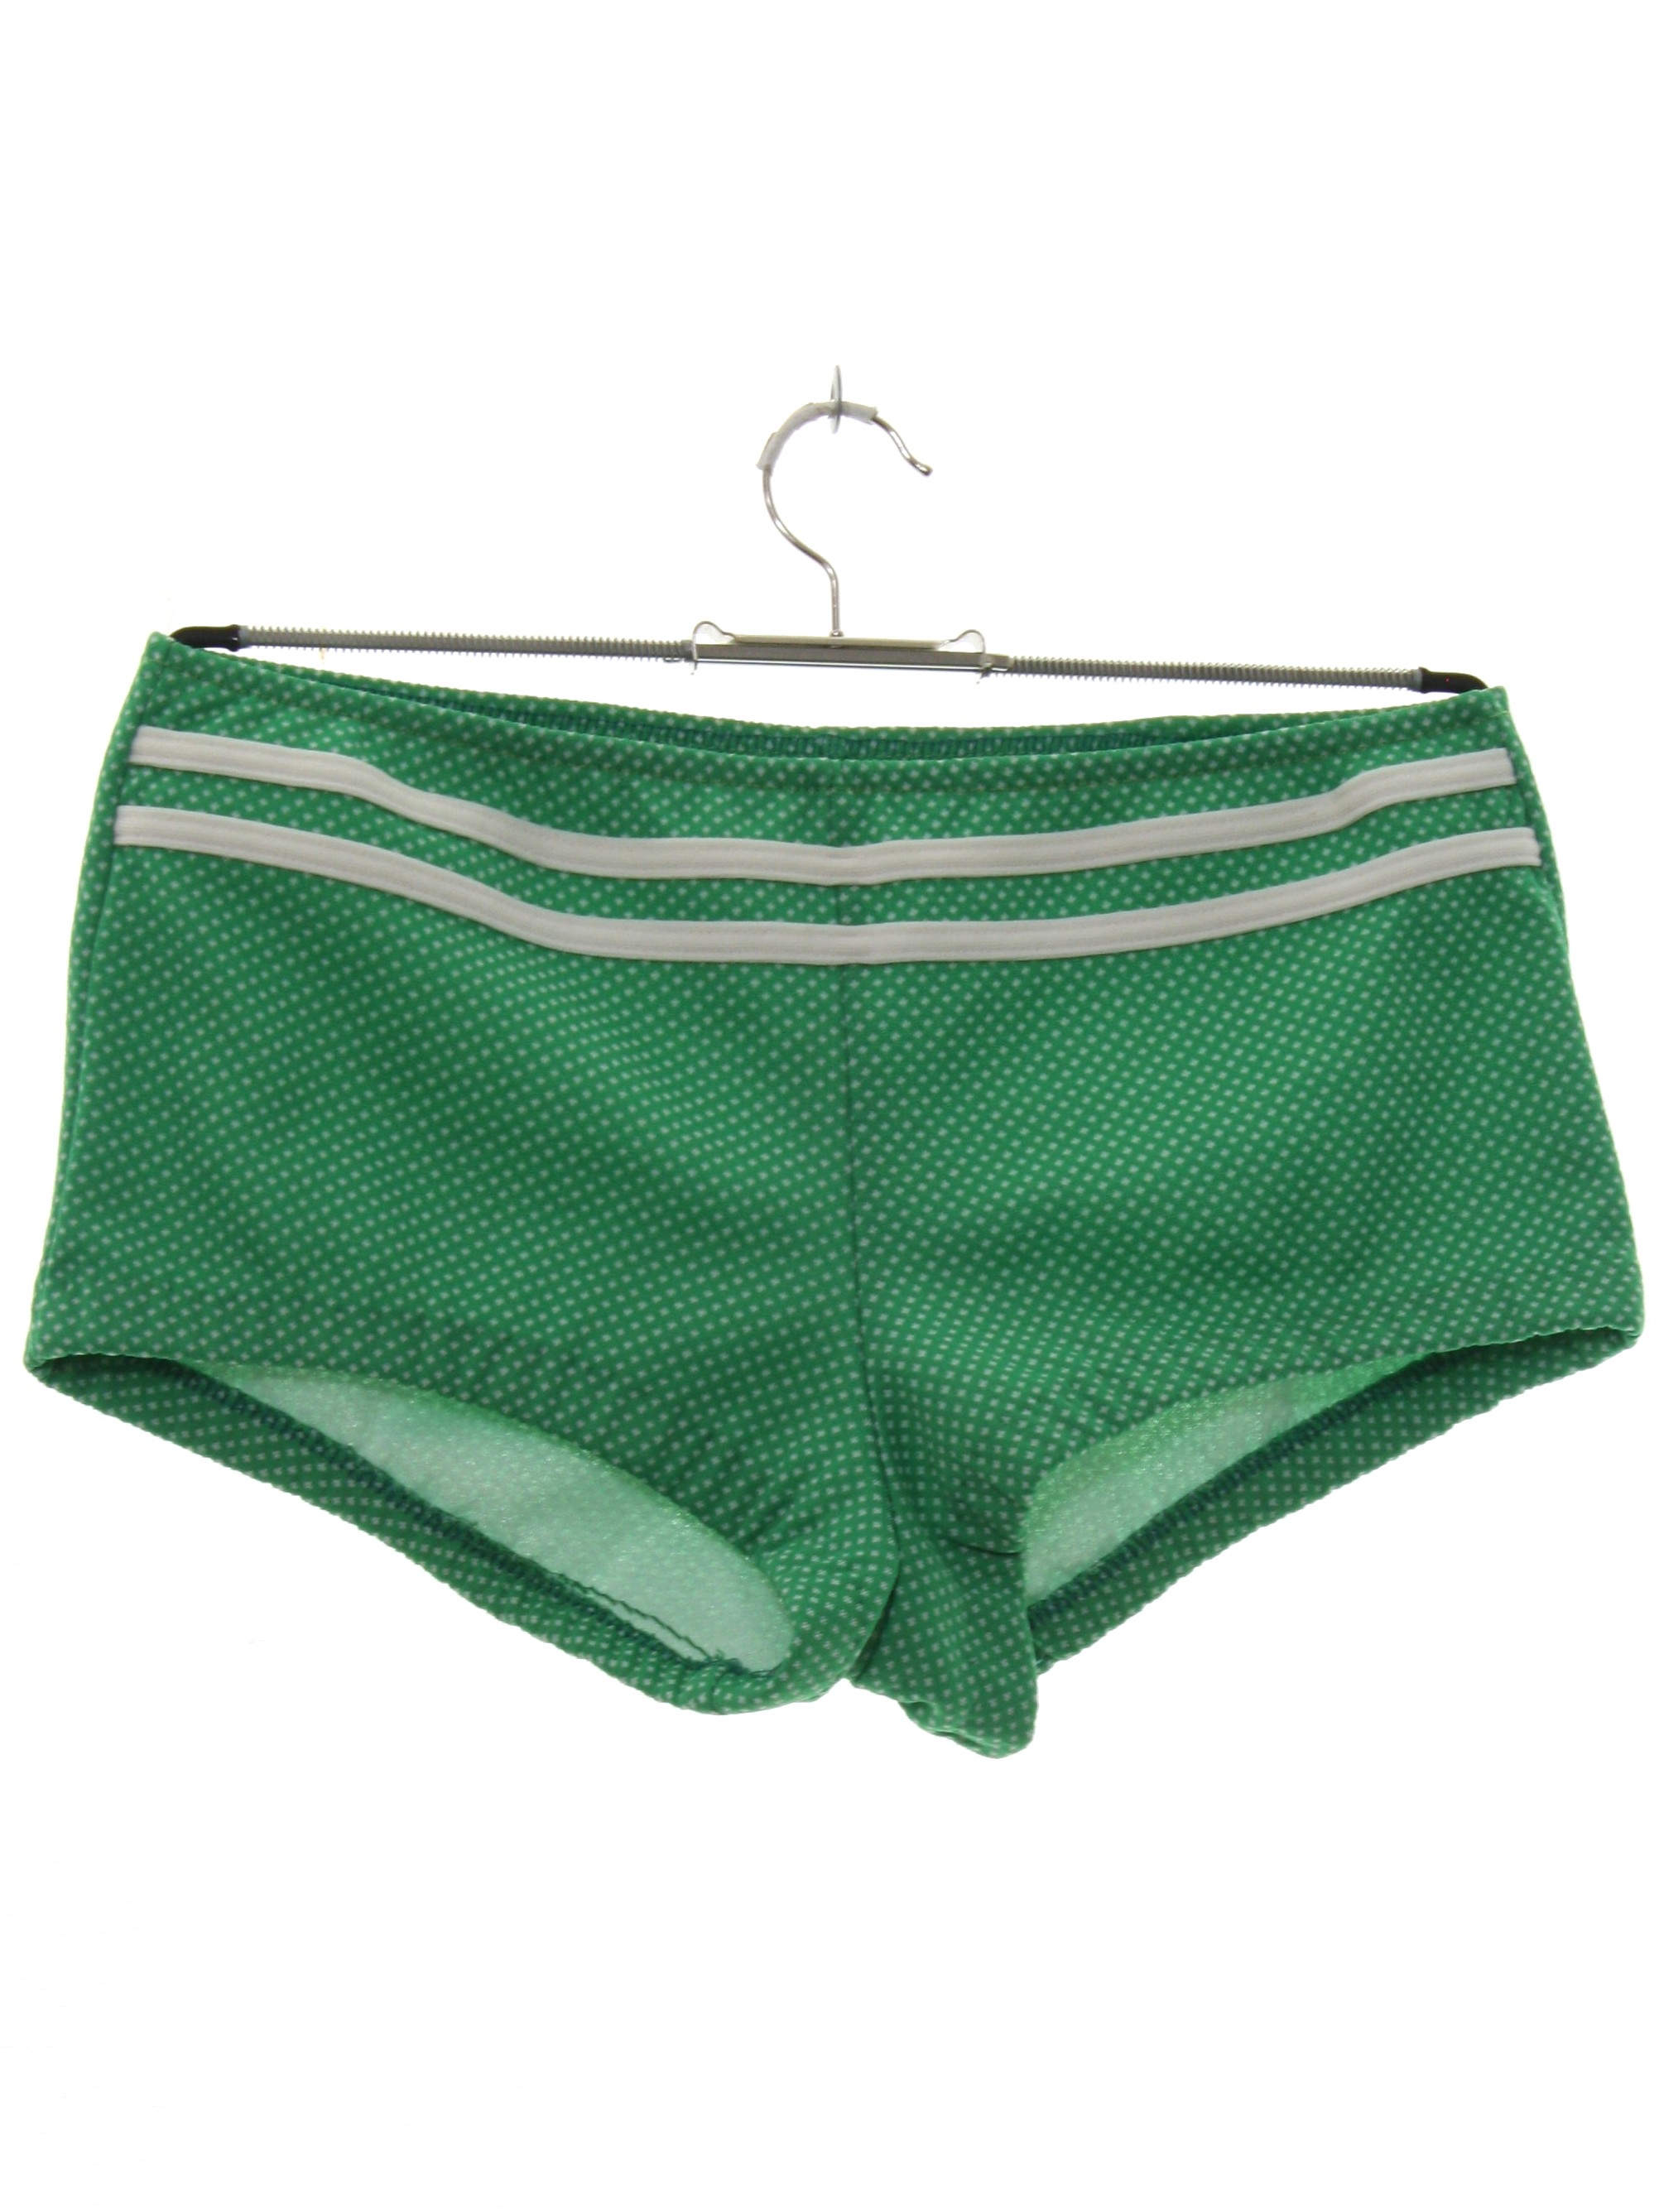 Seventies Vintage Swimsuit/Swimwear: 70s -Missing Label- Womens green ...